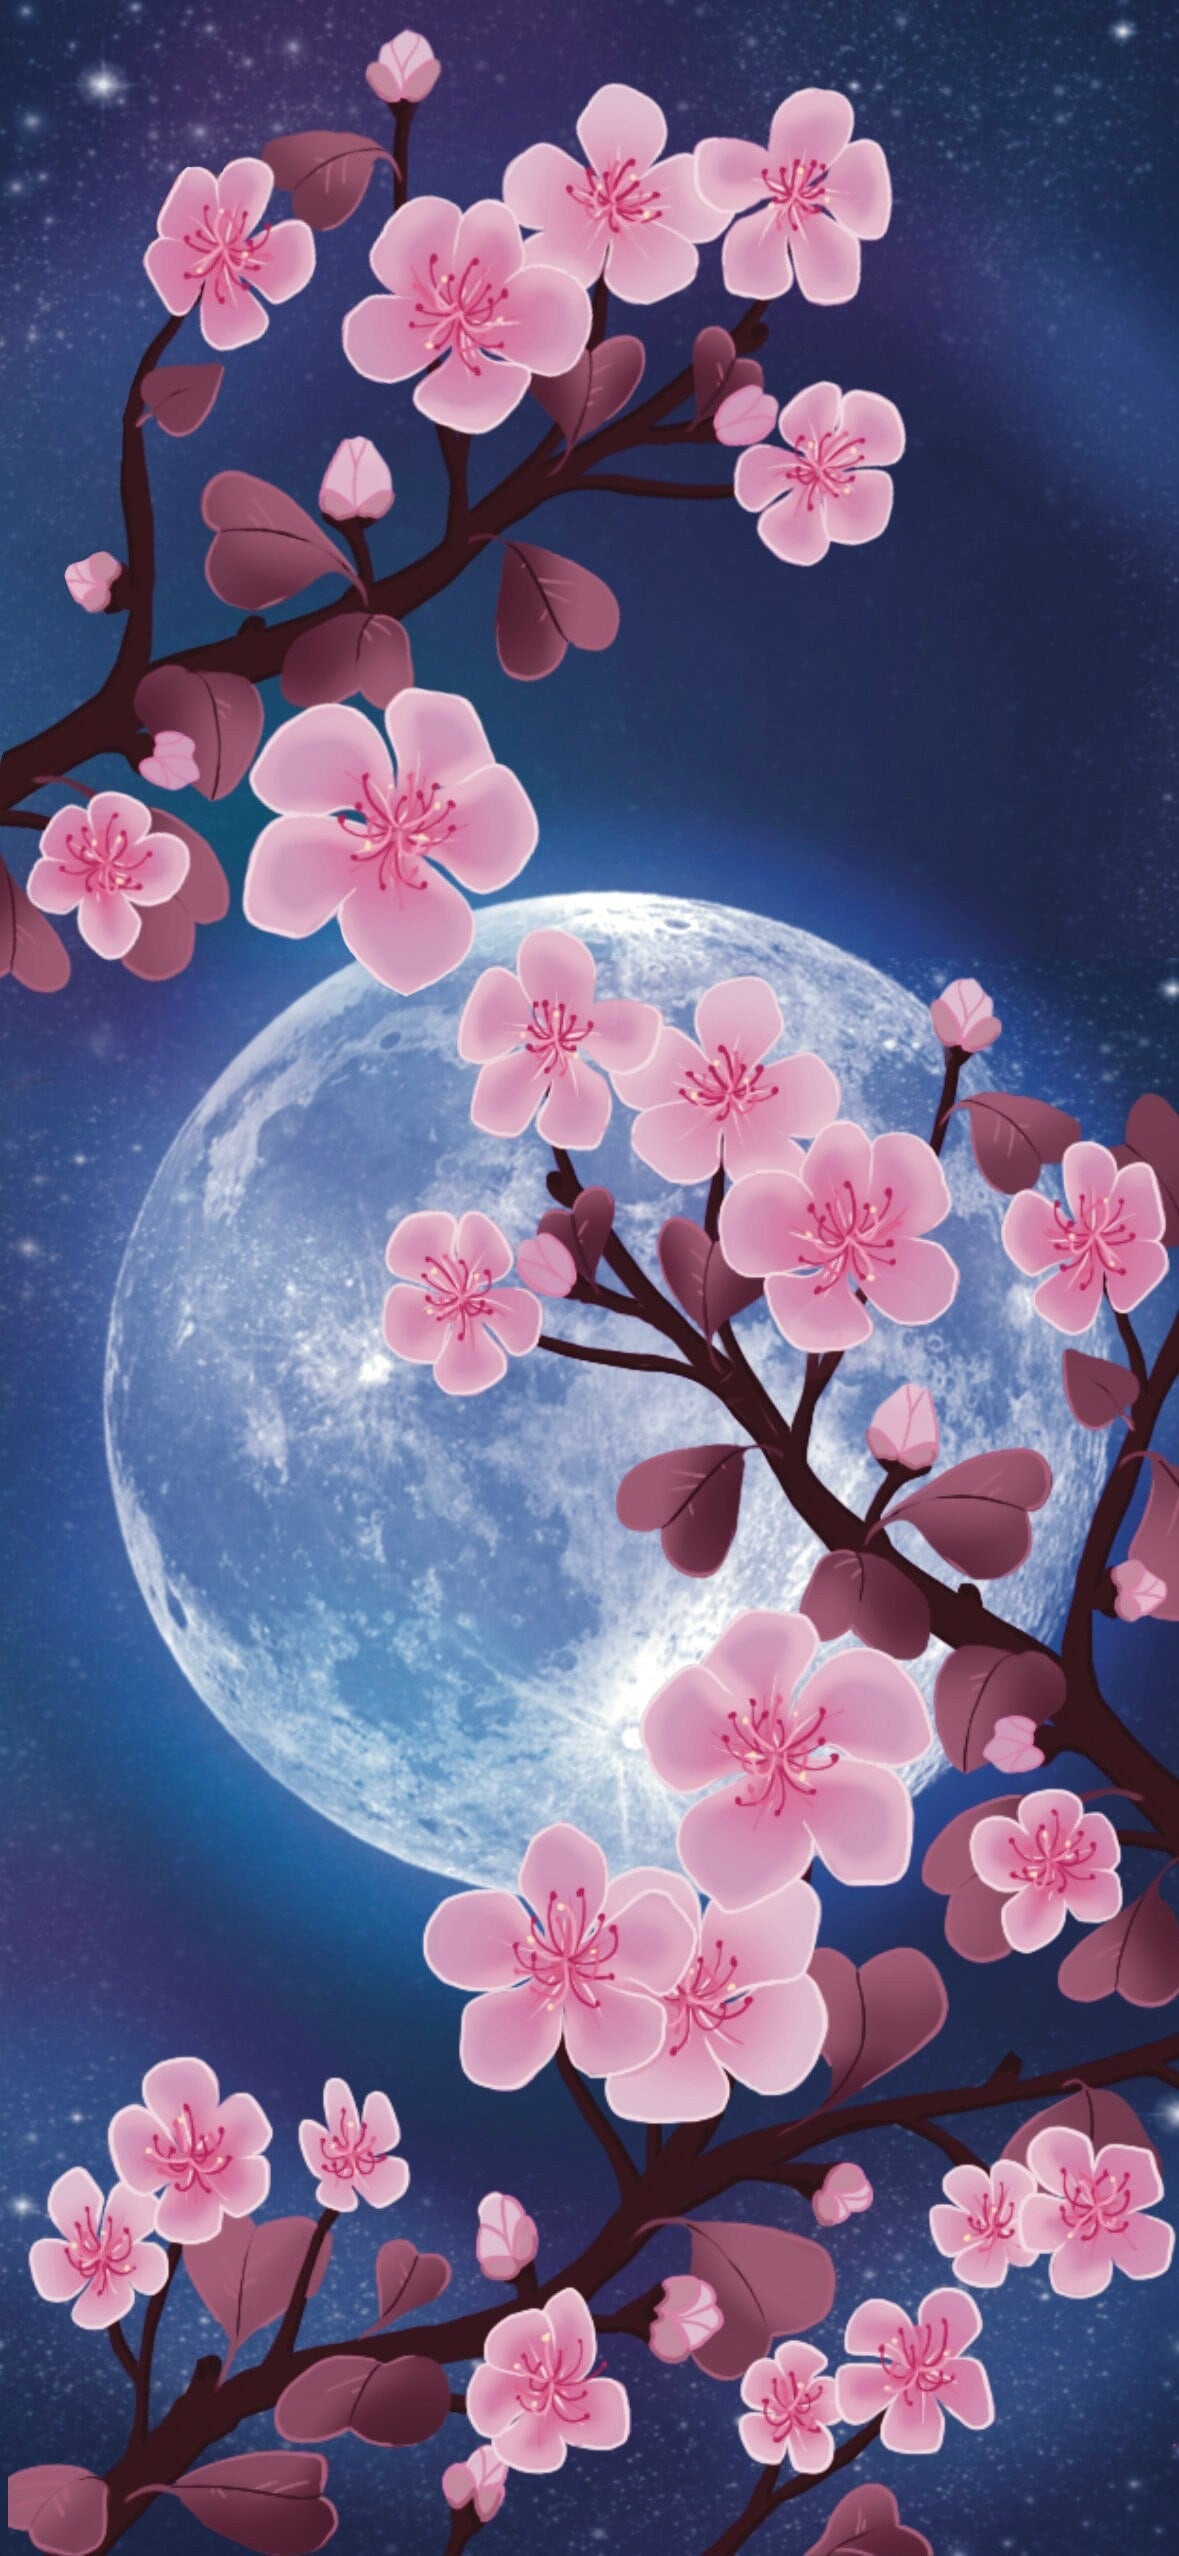 Orange Illustration Cherry Blossom Phone Wallpaper Template and Ideas for  Design  Fotor